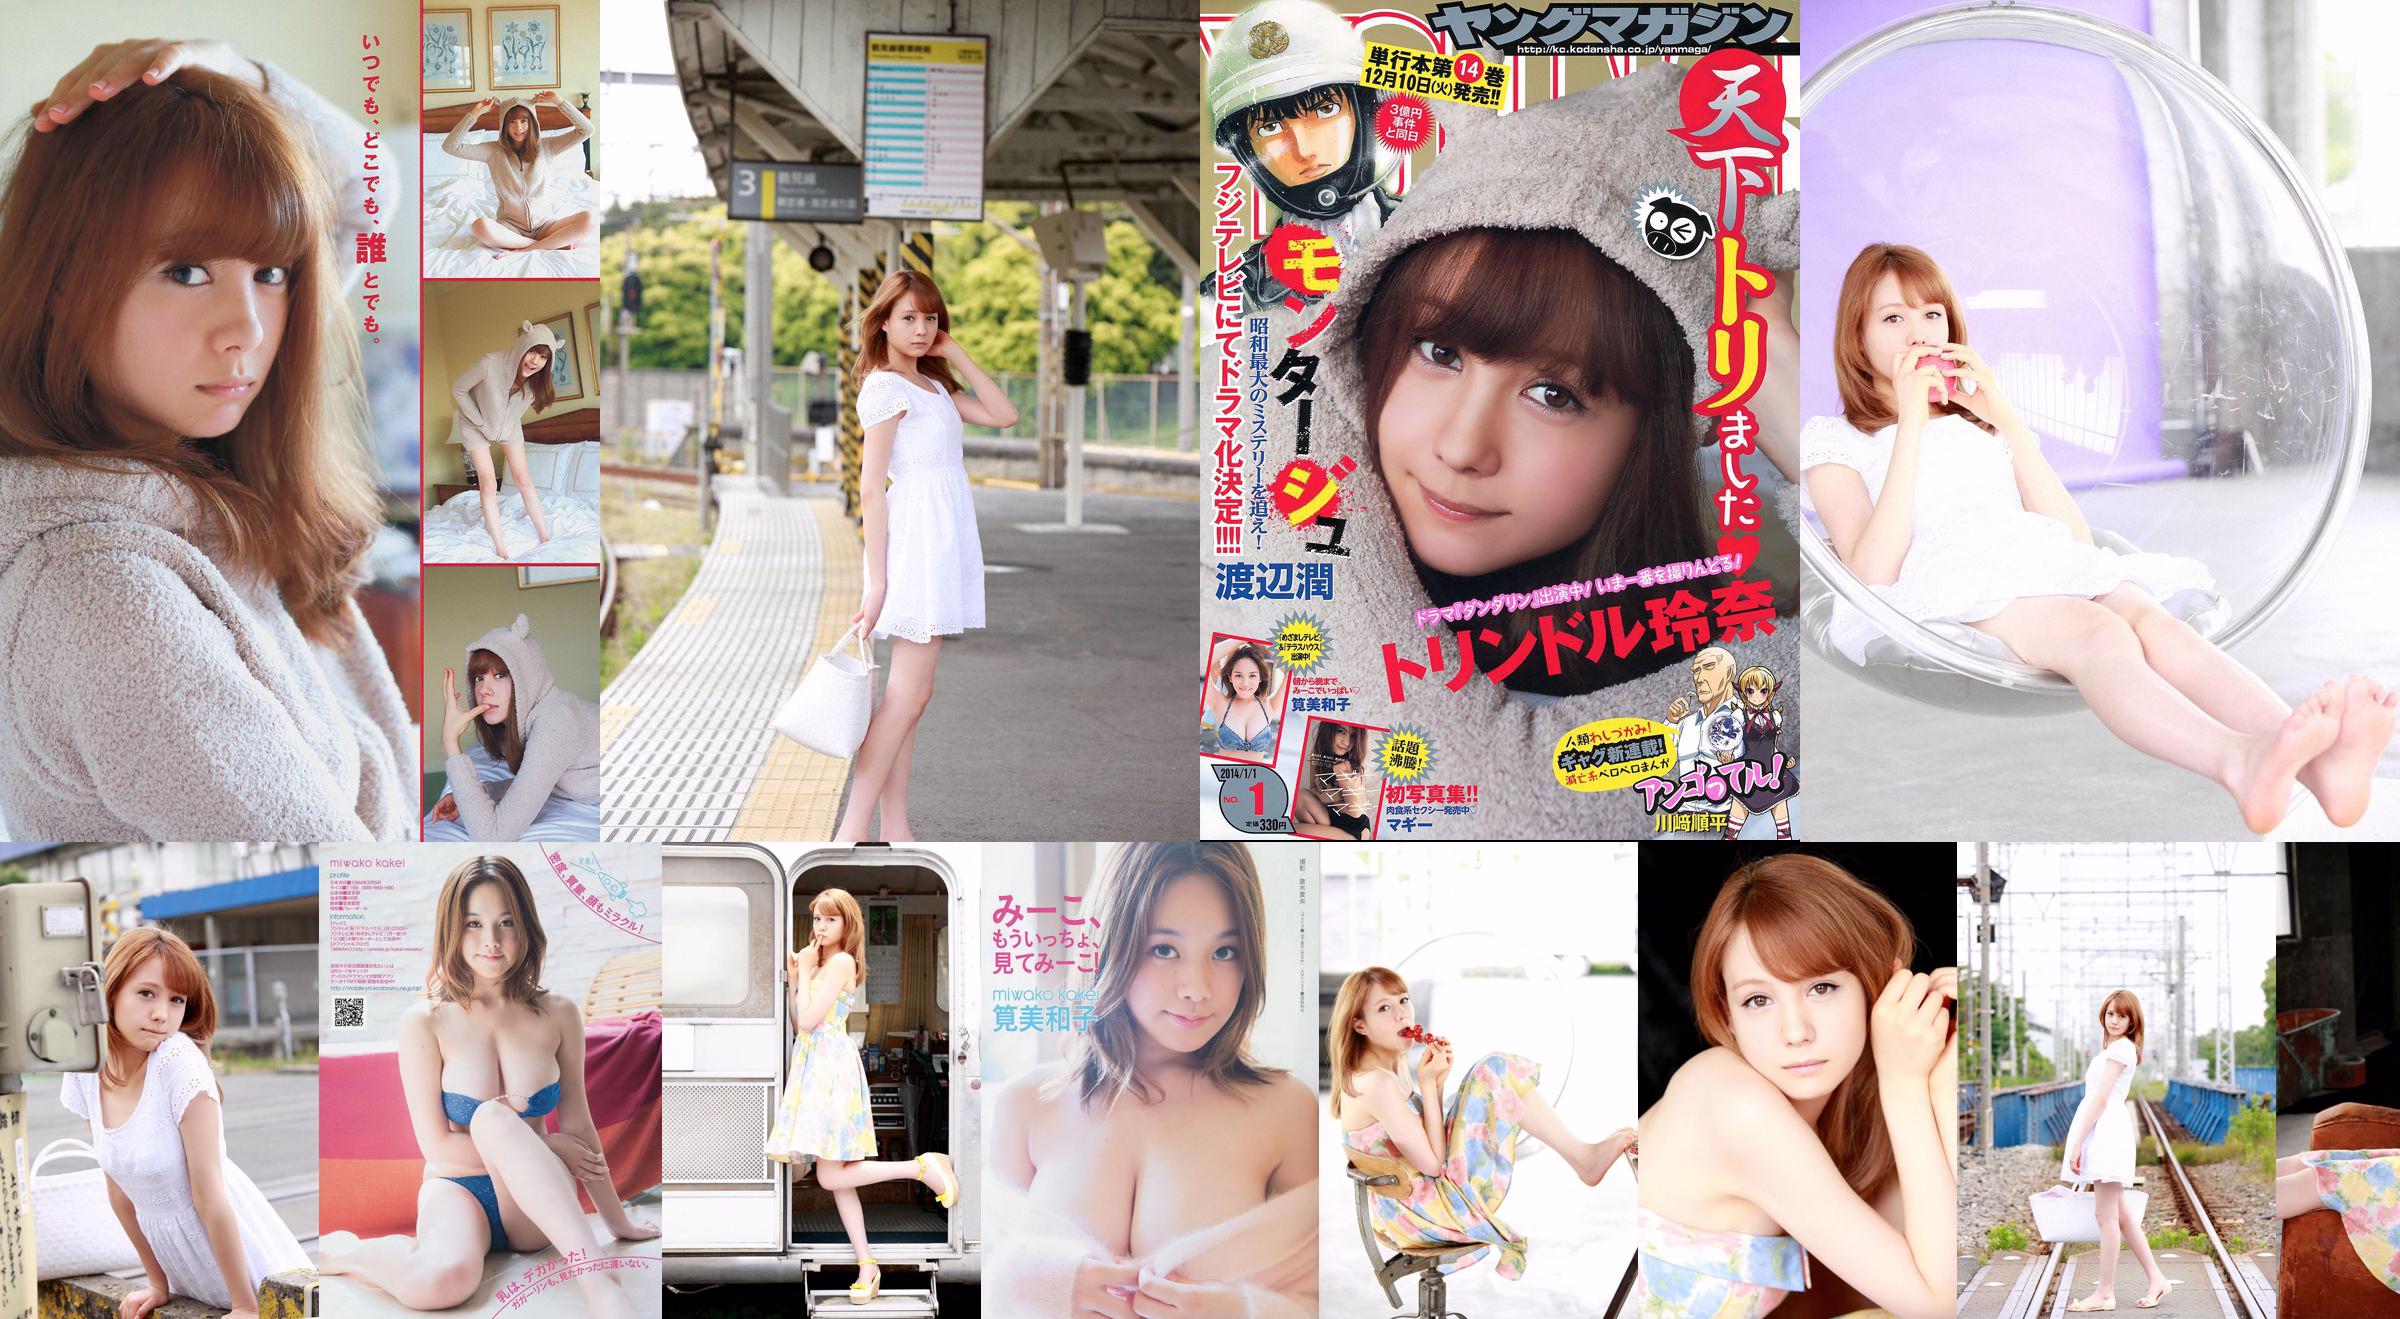 [Revista Young] Reina Triendl Maggie Miwako Kakei 2014 Fotografia Nº 01 No.ad6063 Página 1